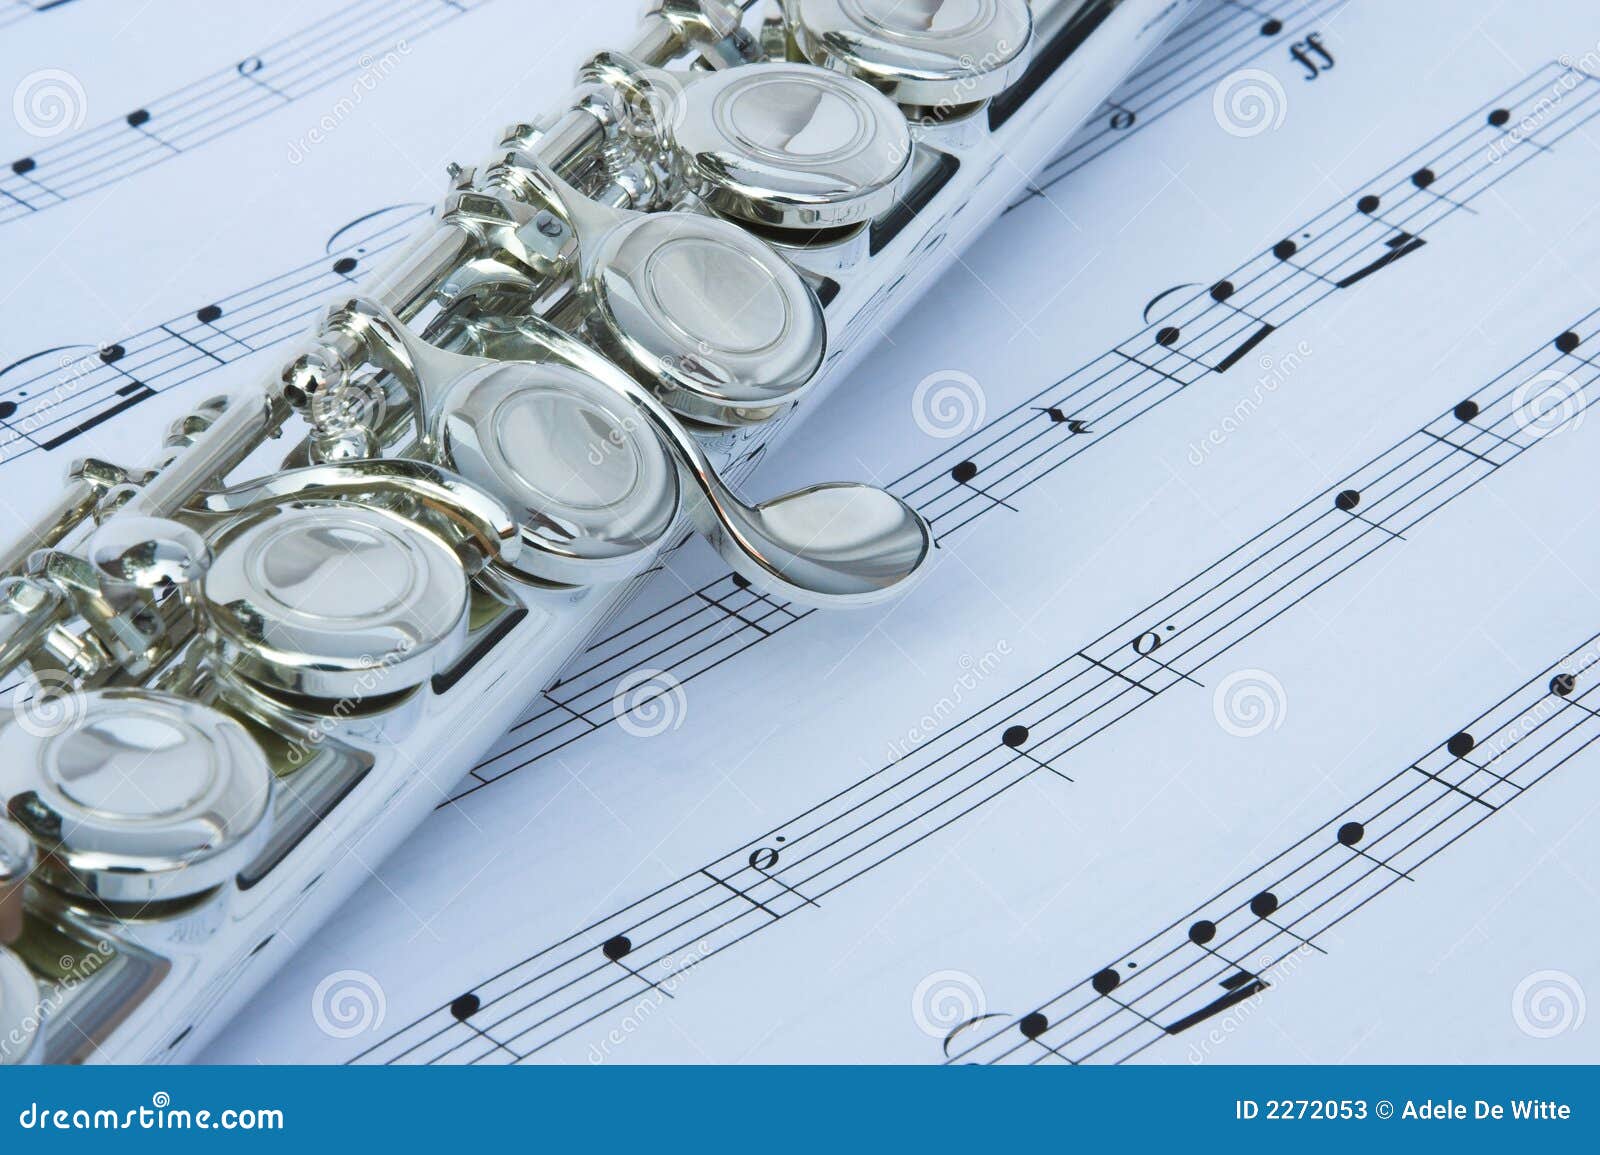 Flute Keys On Music